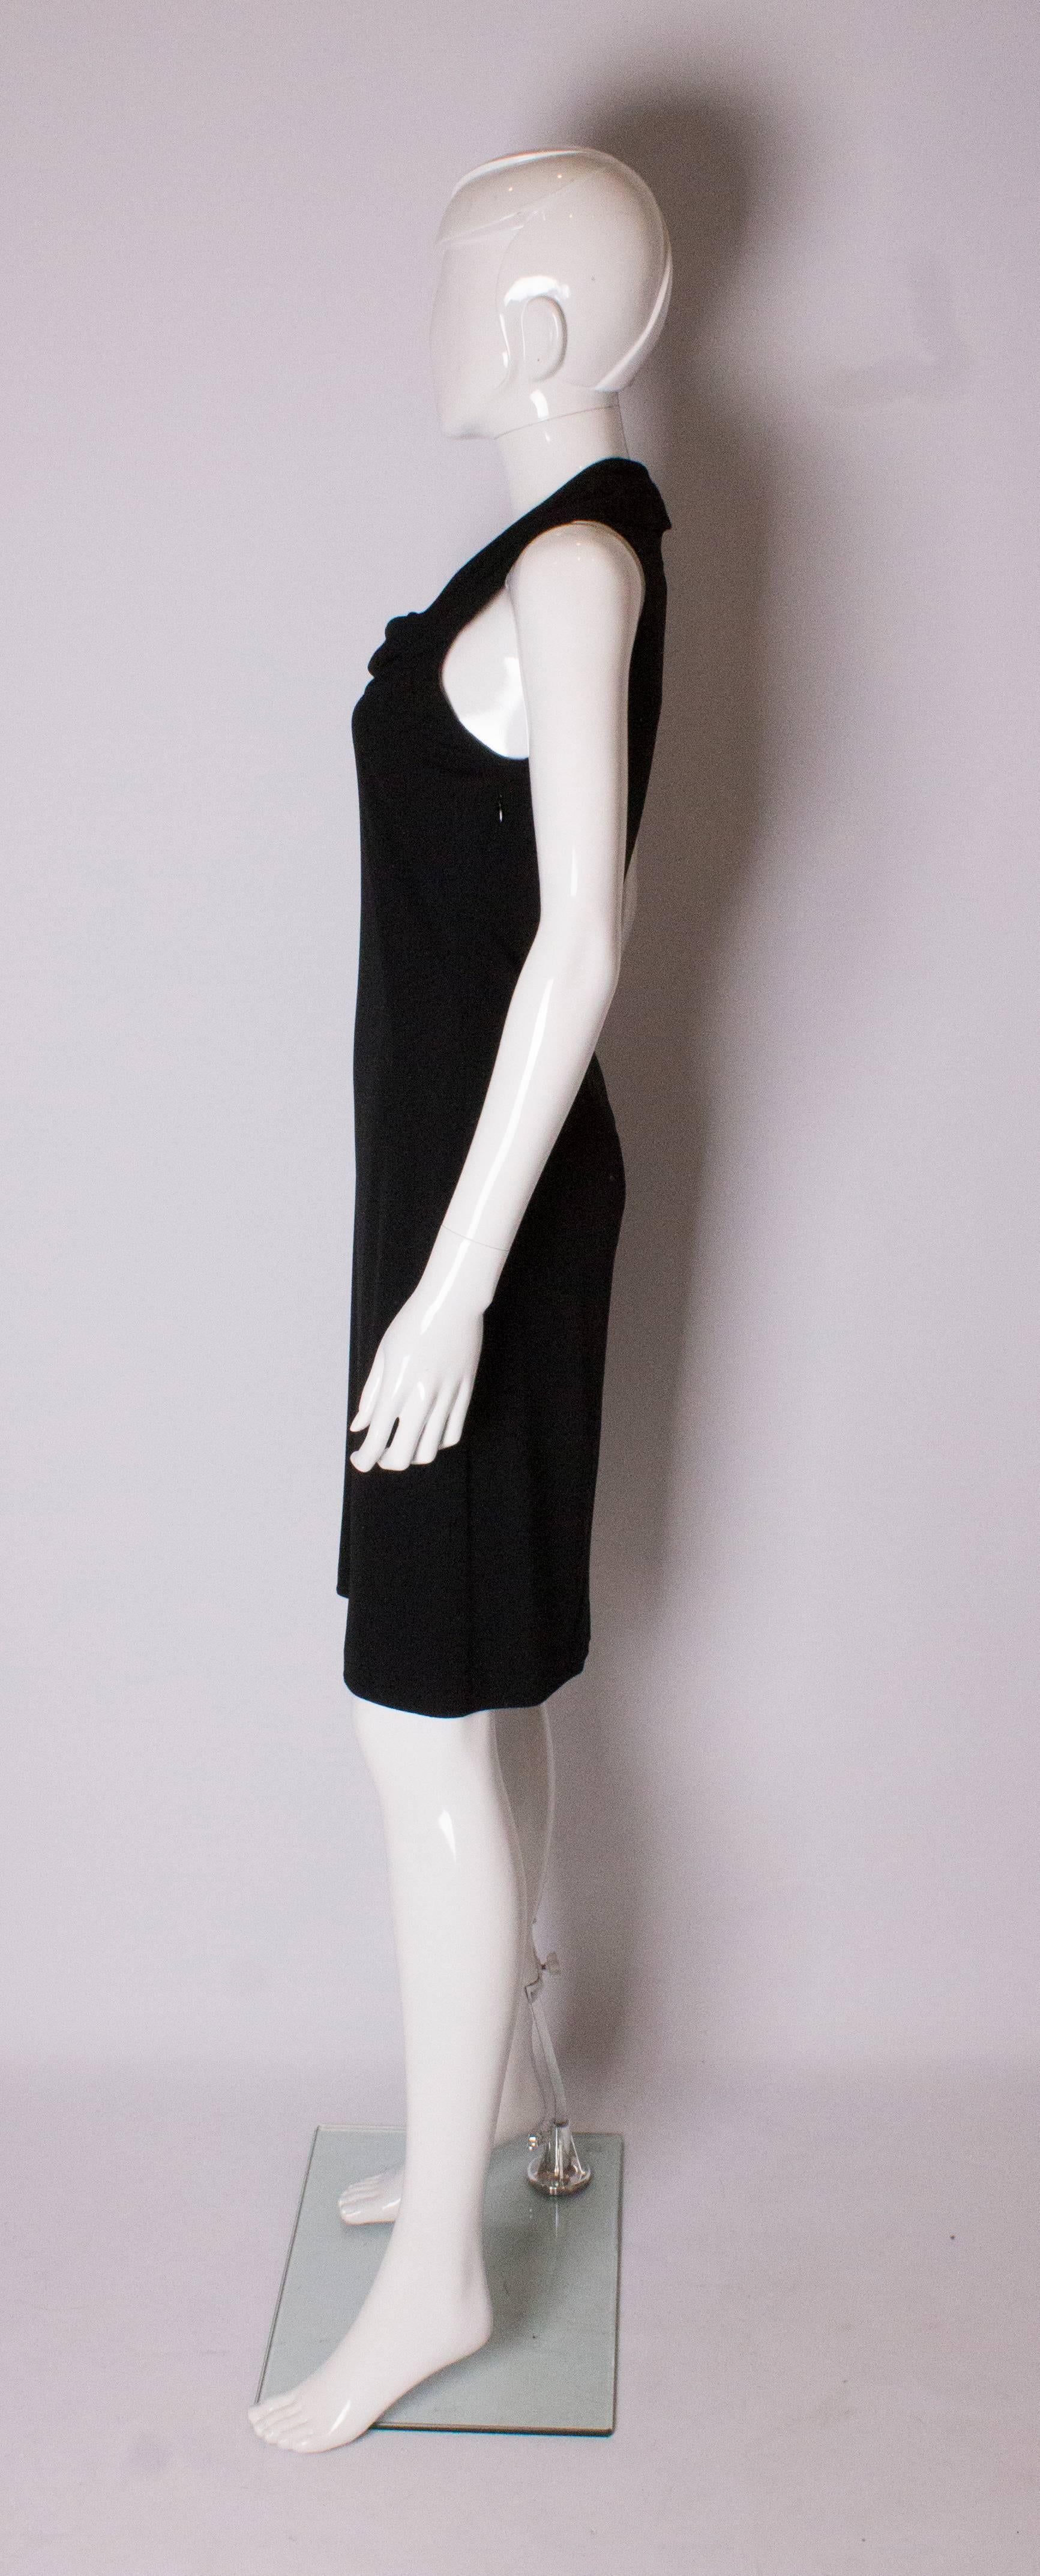 vintage oscar de la renta black dress